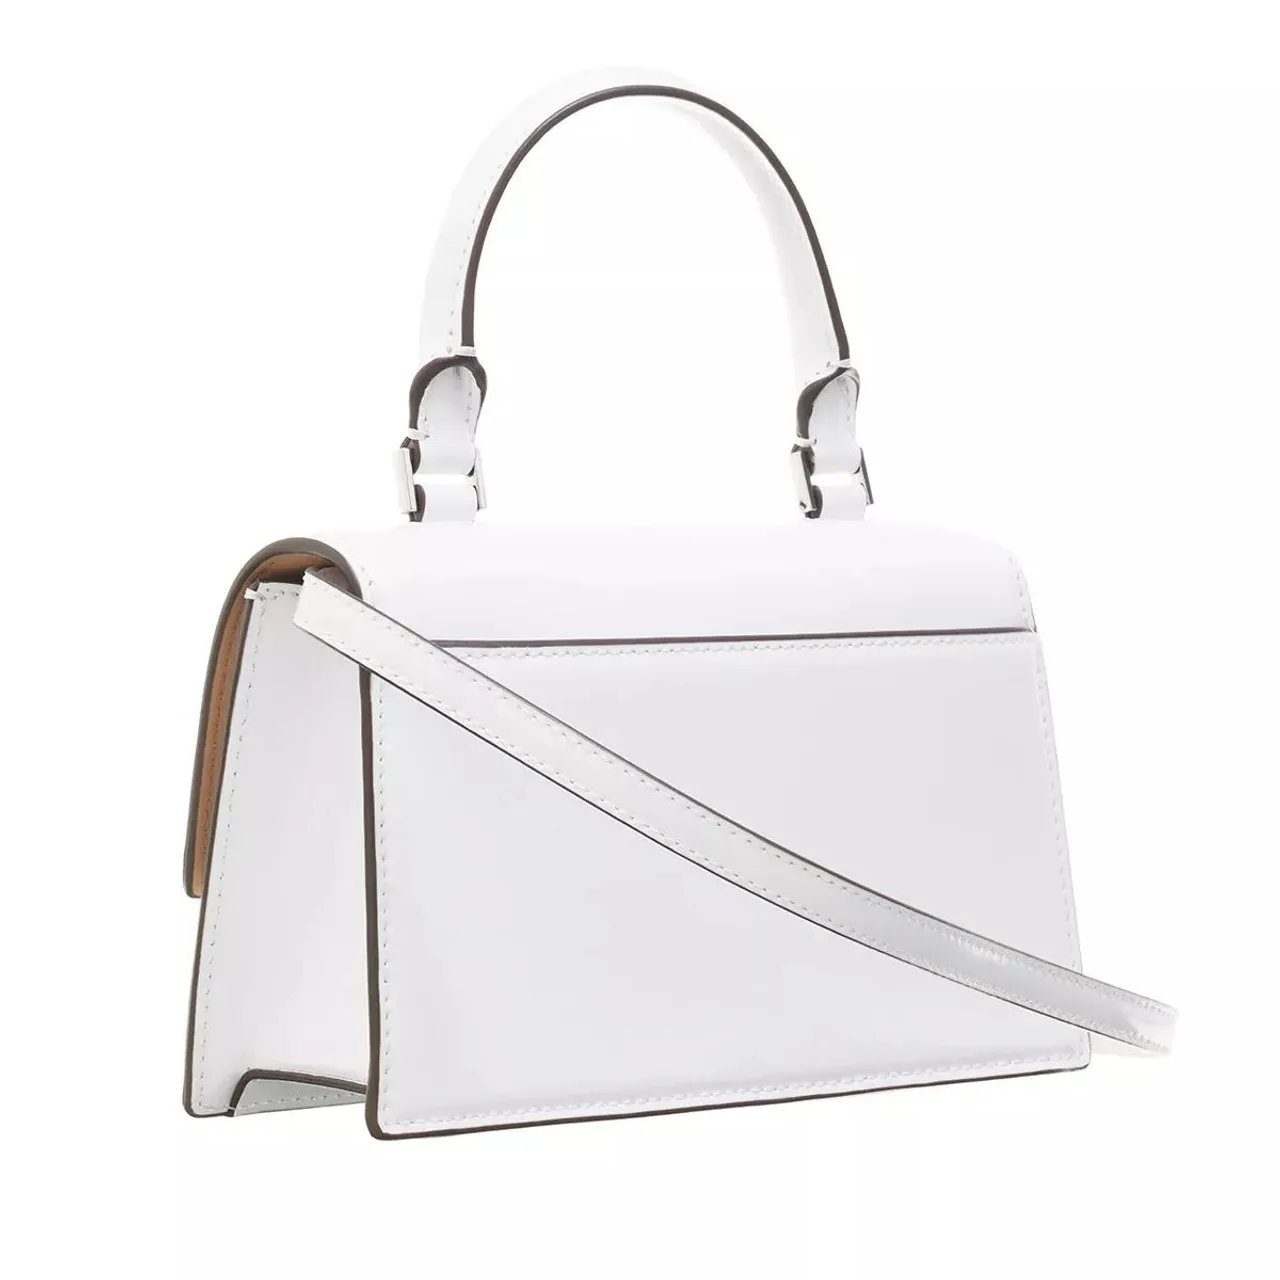 Tory Burch Crossbody Bags - Trend Spazzolato Mini Top-Handle Bag - white - Crossbody Bags for ladies